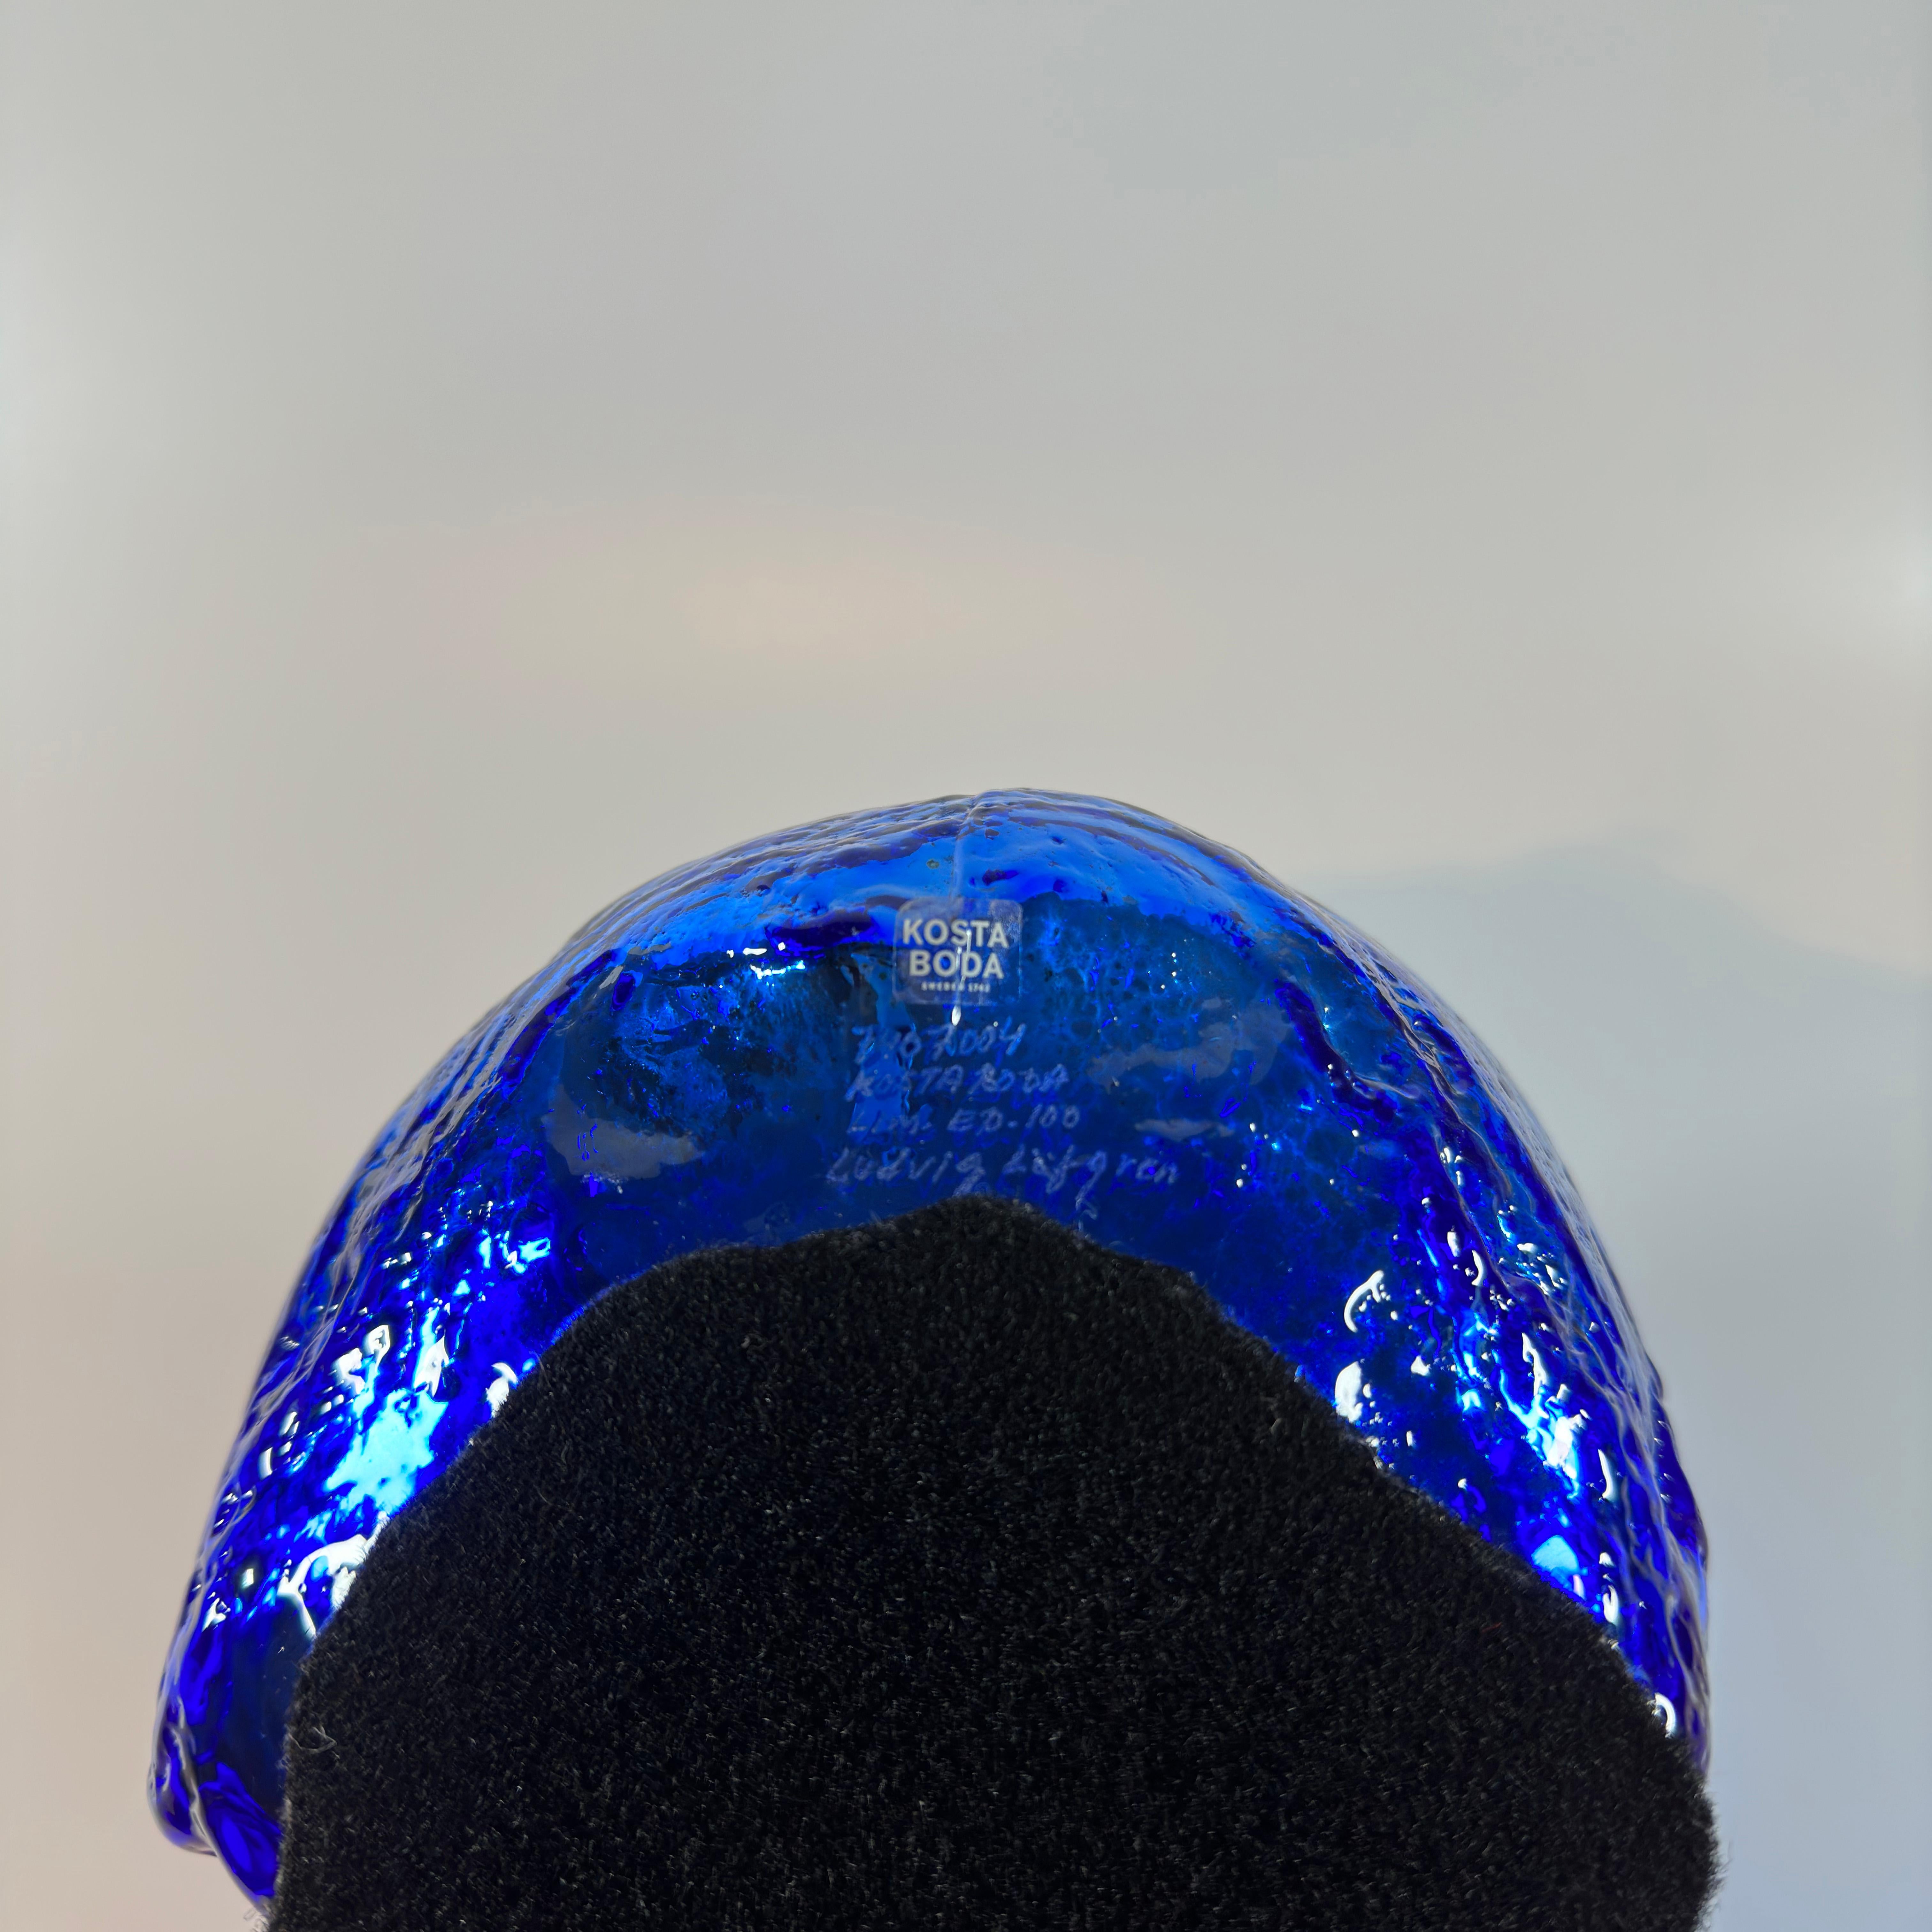 Ludvig Löfgren's Blue Art Glass Skull for Kosta Boda 

This stunning blue art glass skull sculpture, part of Ludvig Löfgren's 'Vanitas' collection, is a striking manifestation of pop culture and memento mori. Crafted in 2011 by the esteemed Swedish